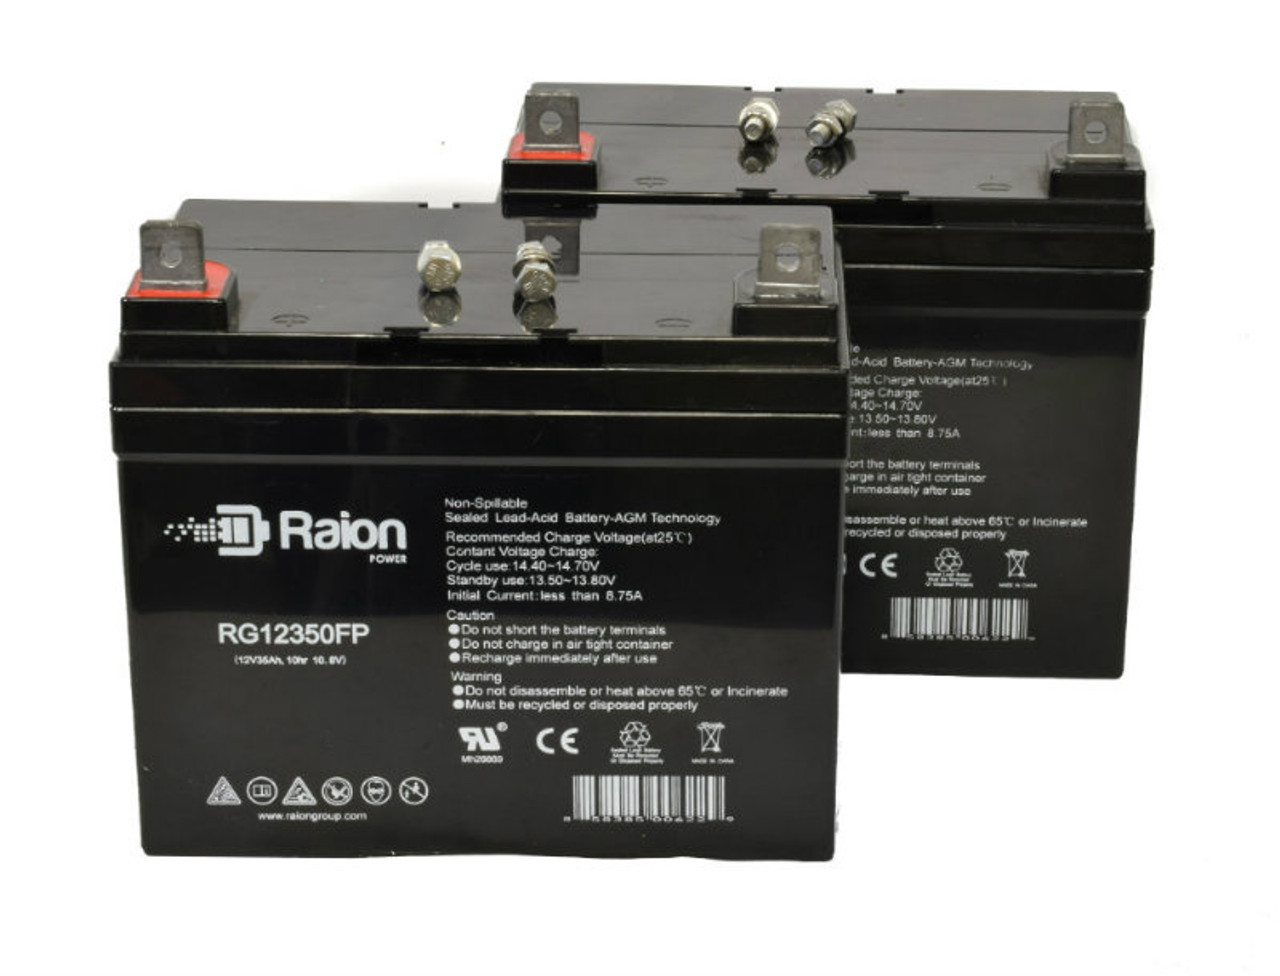 Raion Power Replacement 12V 35Ah Lawn Mower Battery for Simplicity REGENT 16H GARDEN - 2 Pack